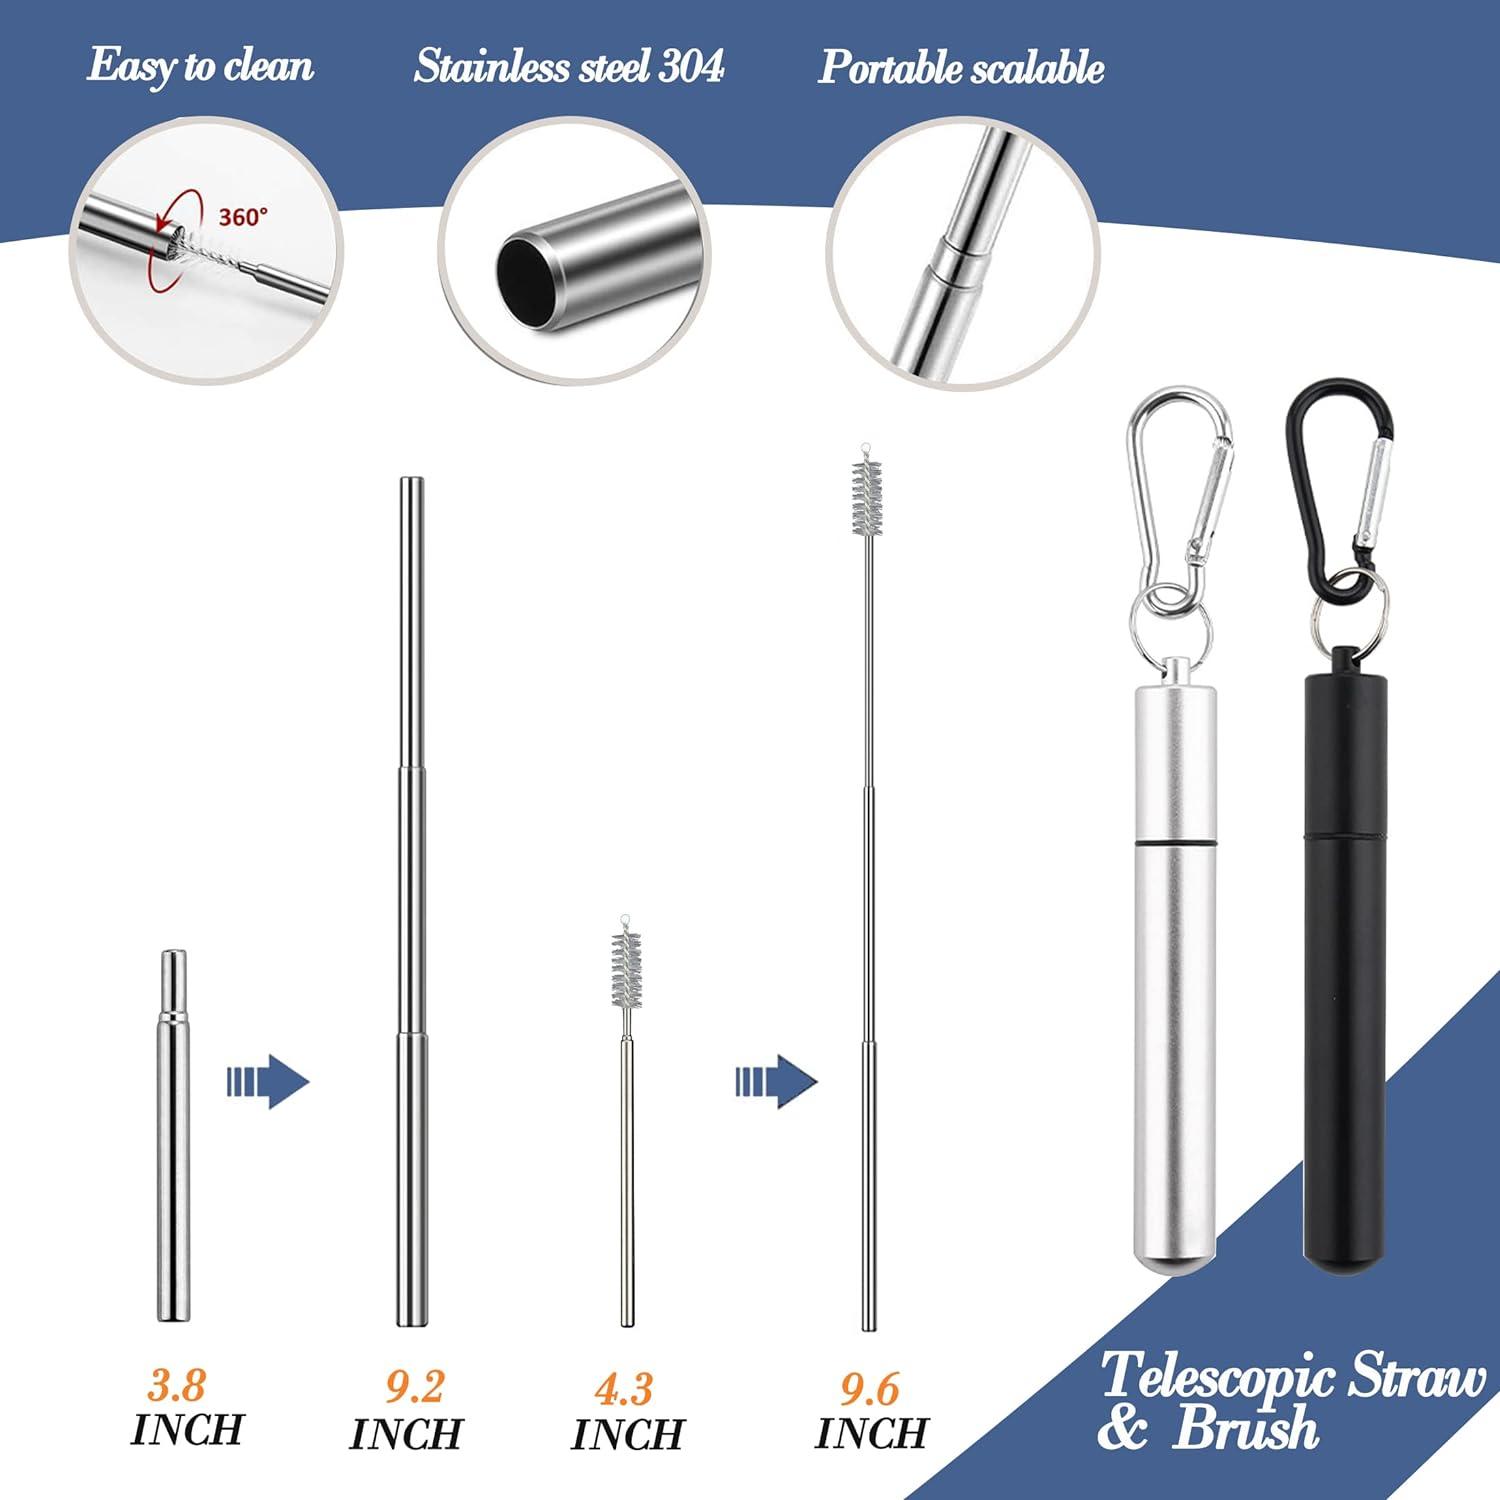 US$ 16.99 - Berglander Portable Utensils,Travel Camping Flatware  Set,Stainless Steel Silverware Set,Include  Knive/Fork/Spoon/Chopsticks/Straws/Brush/Portable Case(Silver-8 Piece) -  m.